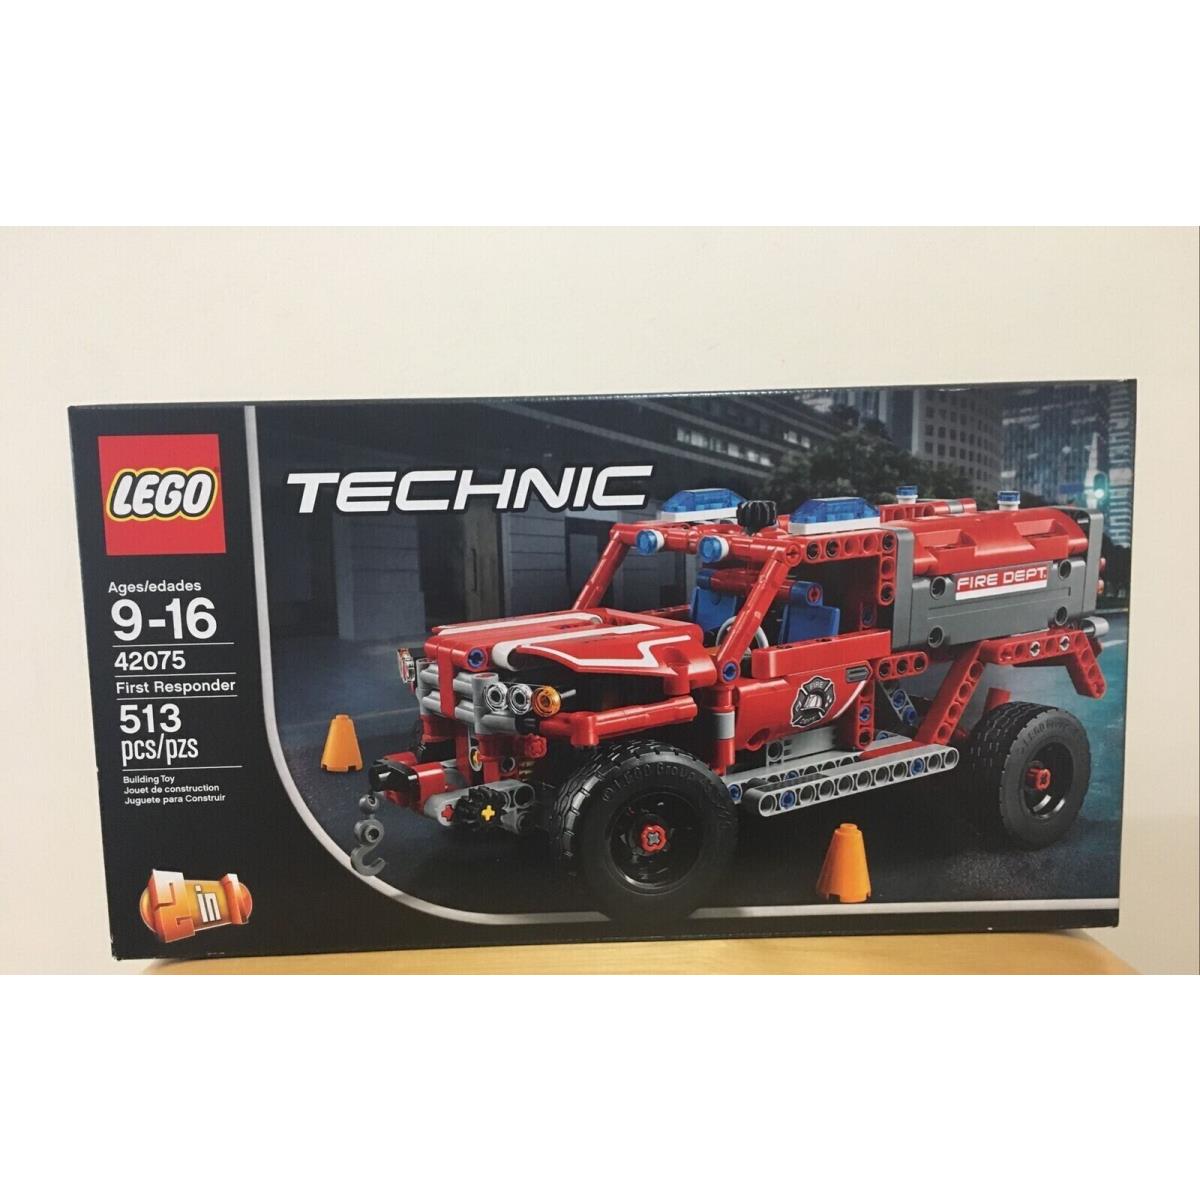 Lego 42075 Technic First Responder Building Kit 513 Pcs Retired Set